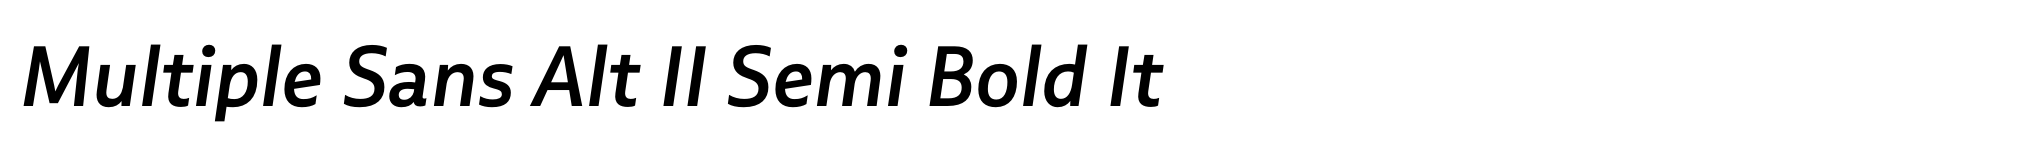 Multiple Sans Alt II Semi Bold It image